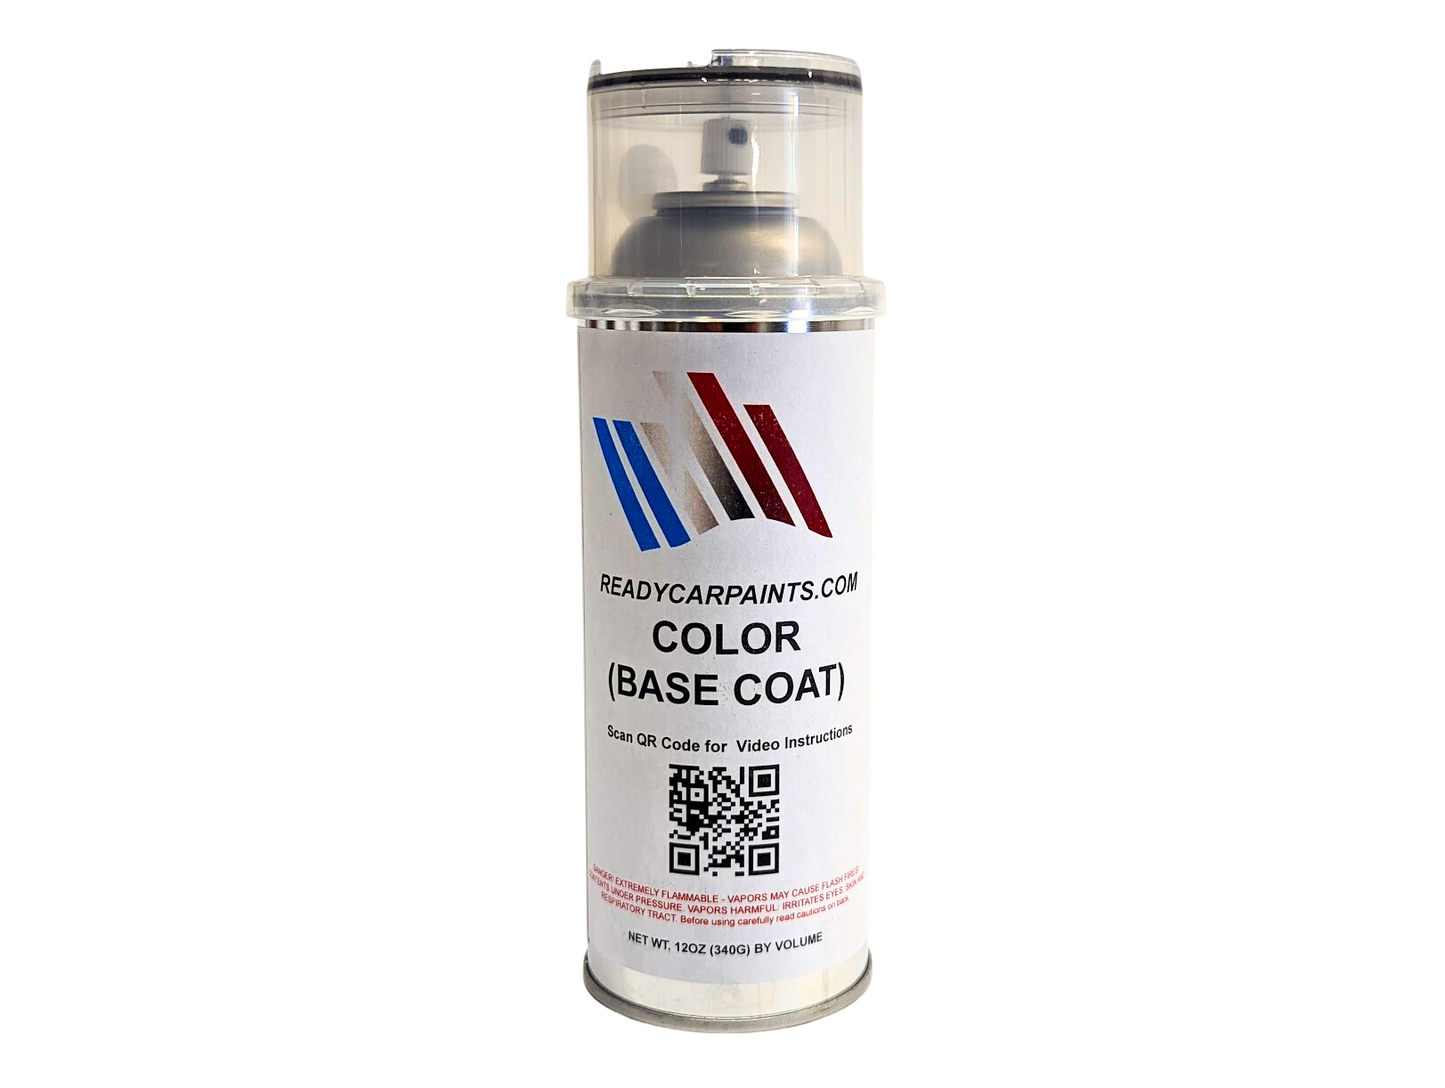 BENTLEY 6408/9560199 Magenta Pearl Automotive Spray Paint 100% OEM Color Match